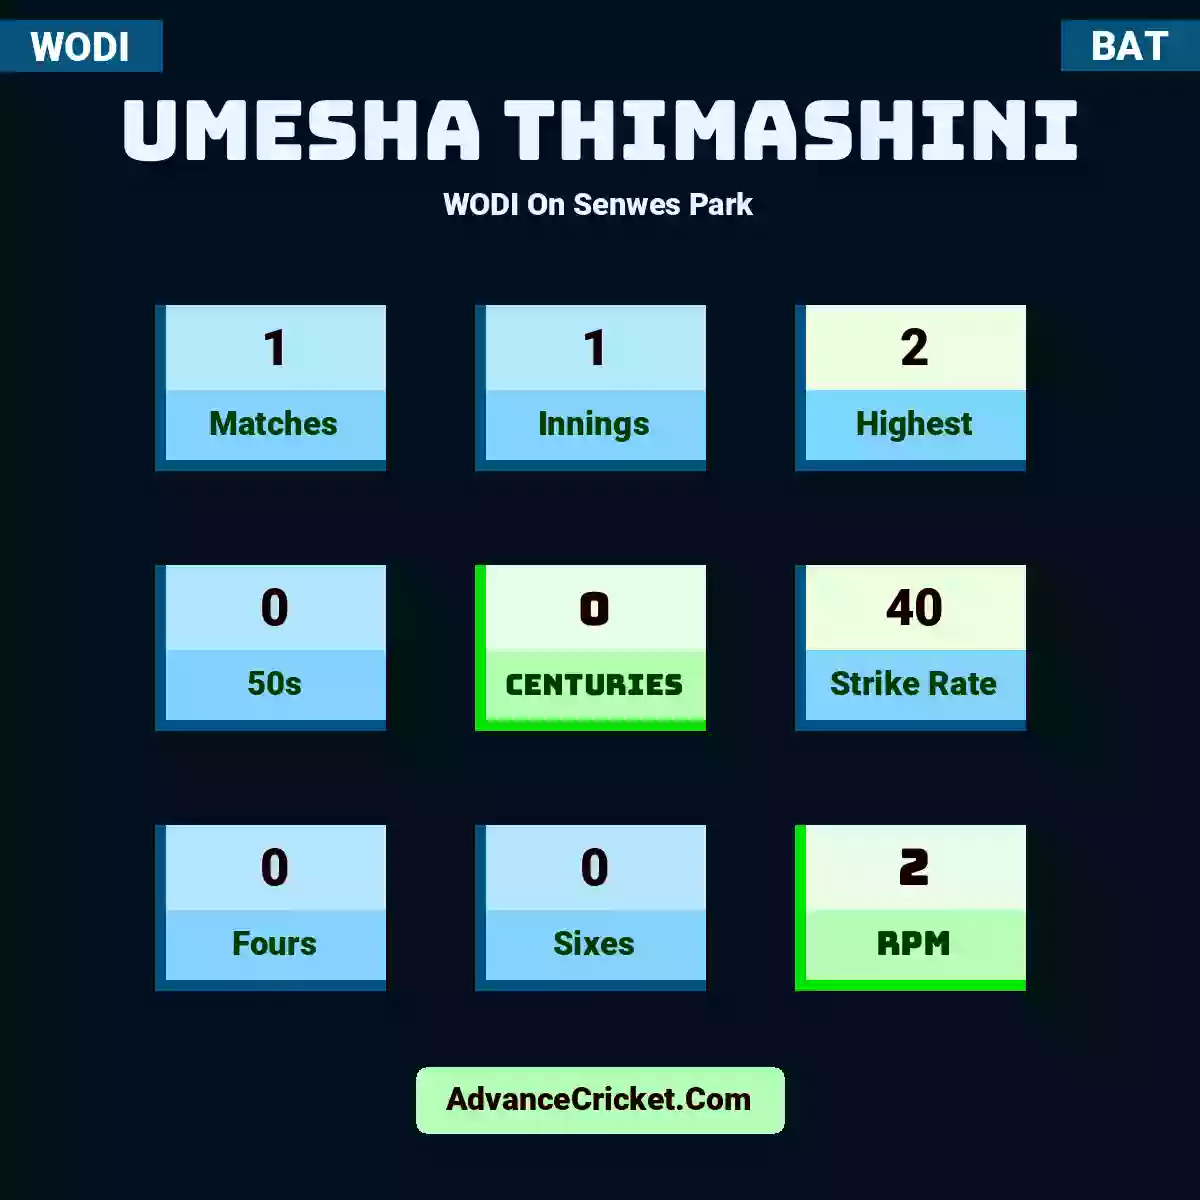 Umesha Thimashini WODI  On Senwes Park, Umesha Thimashini played 1 matches, scored 2 runs as highest, 0 half-centuries, and 0 centuries, with a strike rate of 40. U.Thimashini hit 0 fours and 0 sixes, with an RPM of 2.